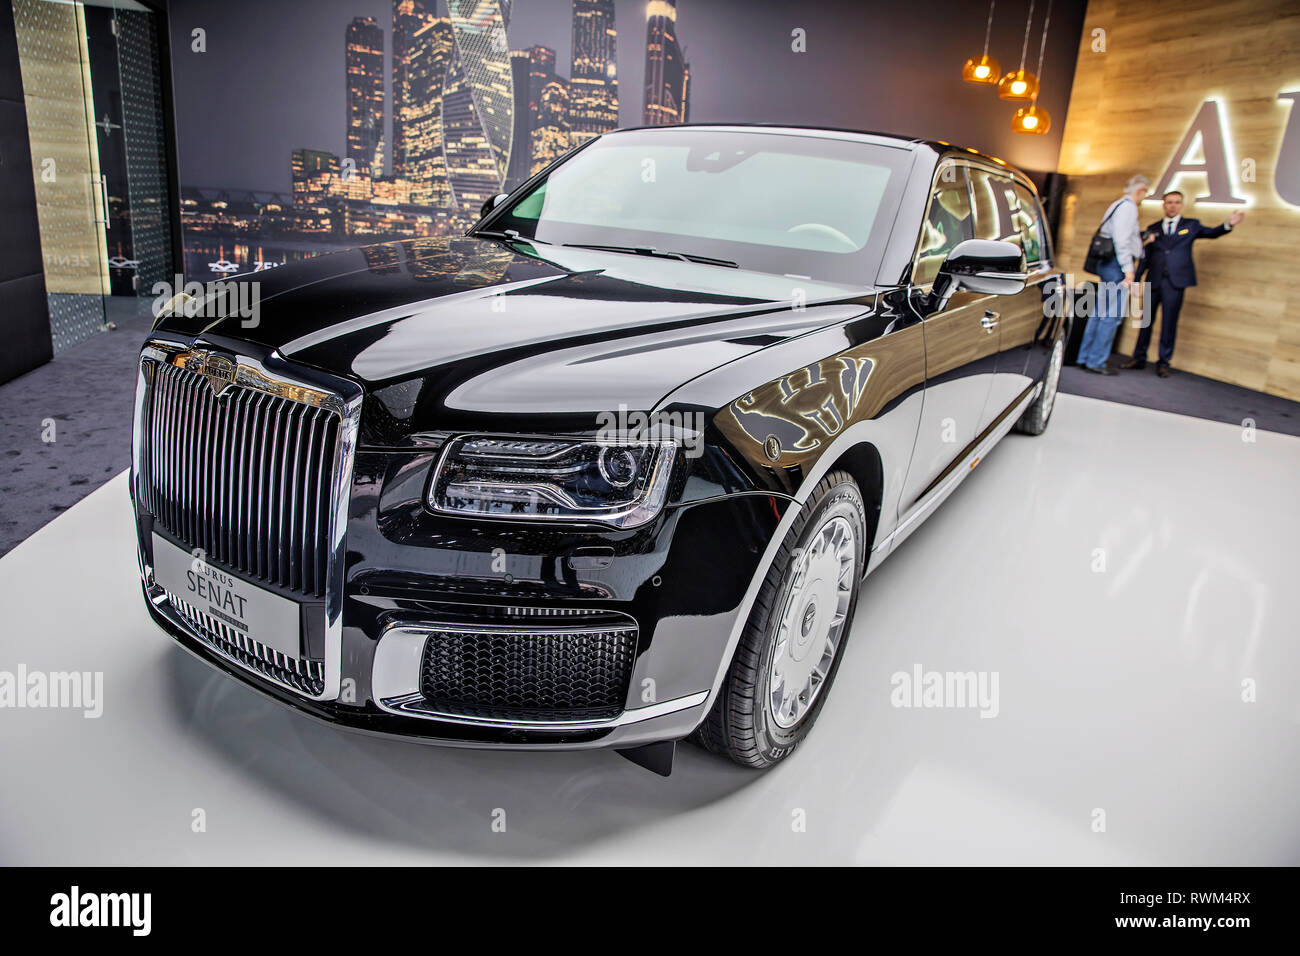 https://c8.alamy.com/comp/RWM4RX/aurus-senat-russian-luxury-limousine-that-carries-also-russian-president-vladimir-putin-was-presented-during-the-2019-geneva-international-motor-sh-RWM4RX.jpg